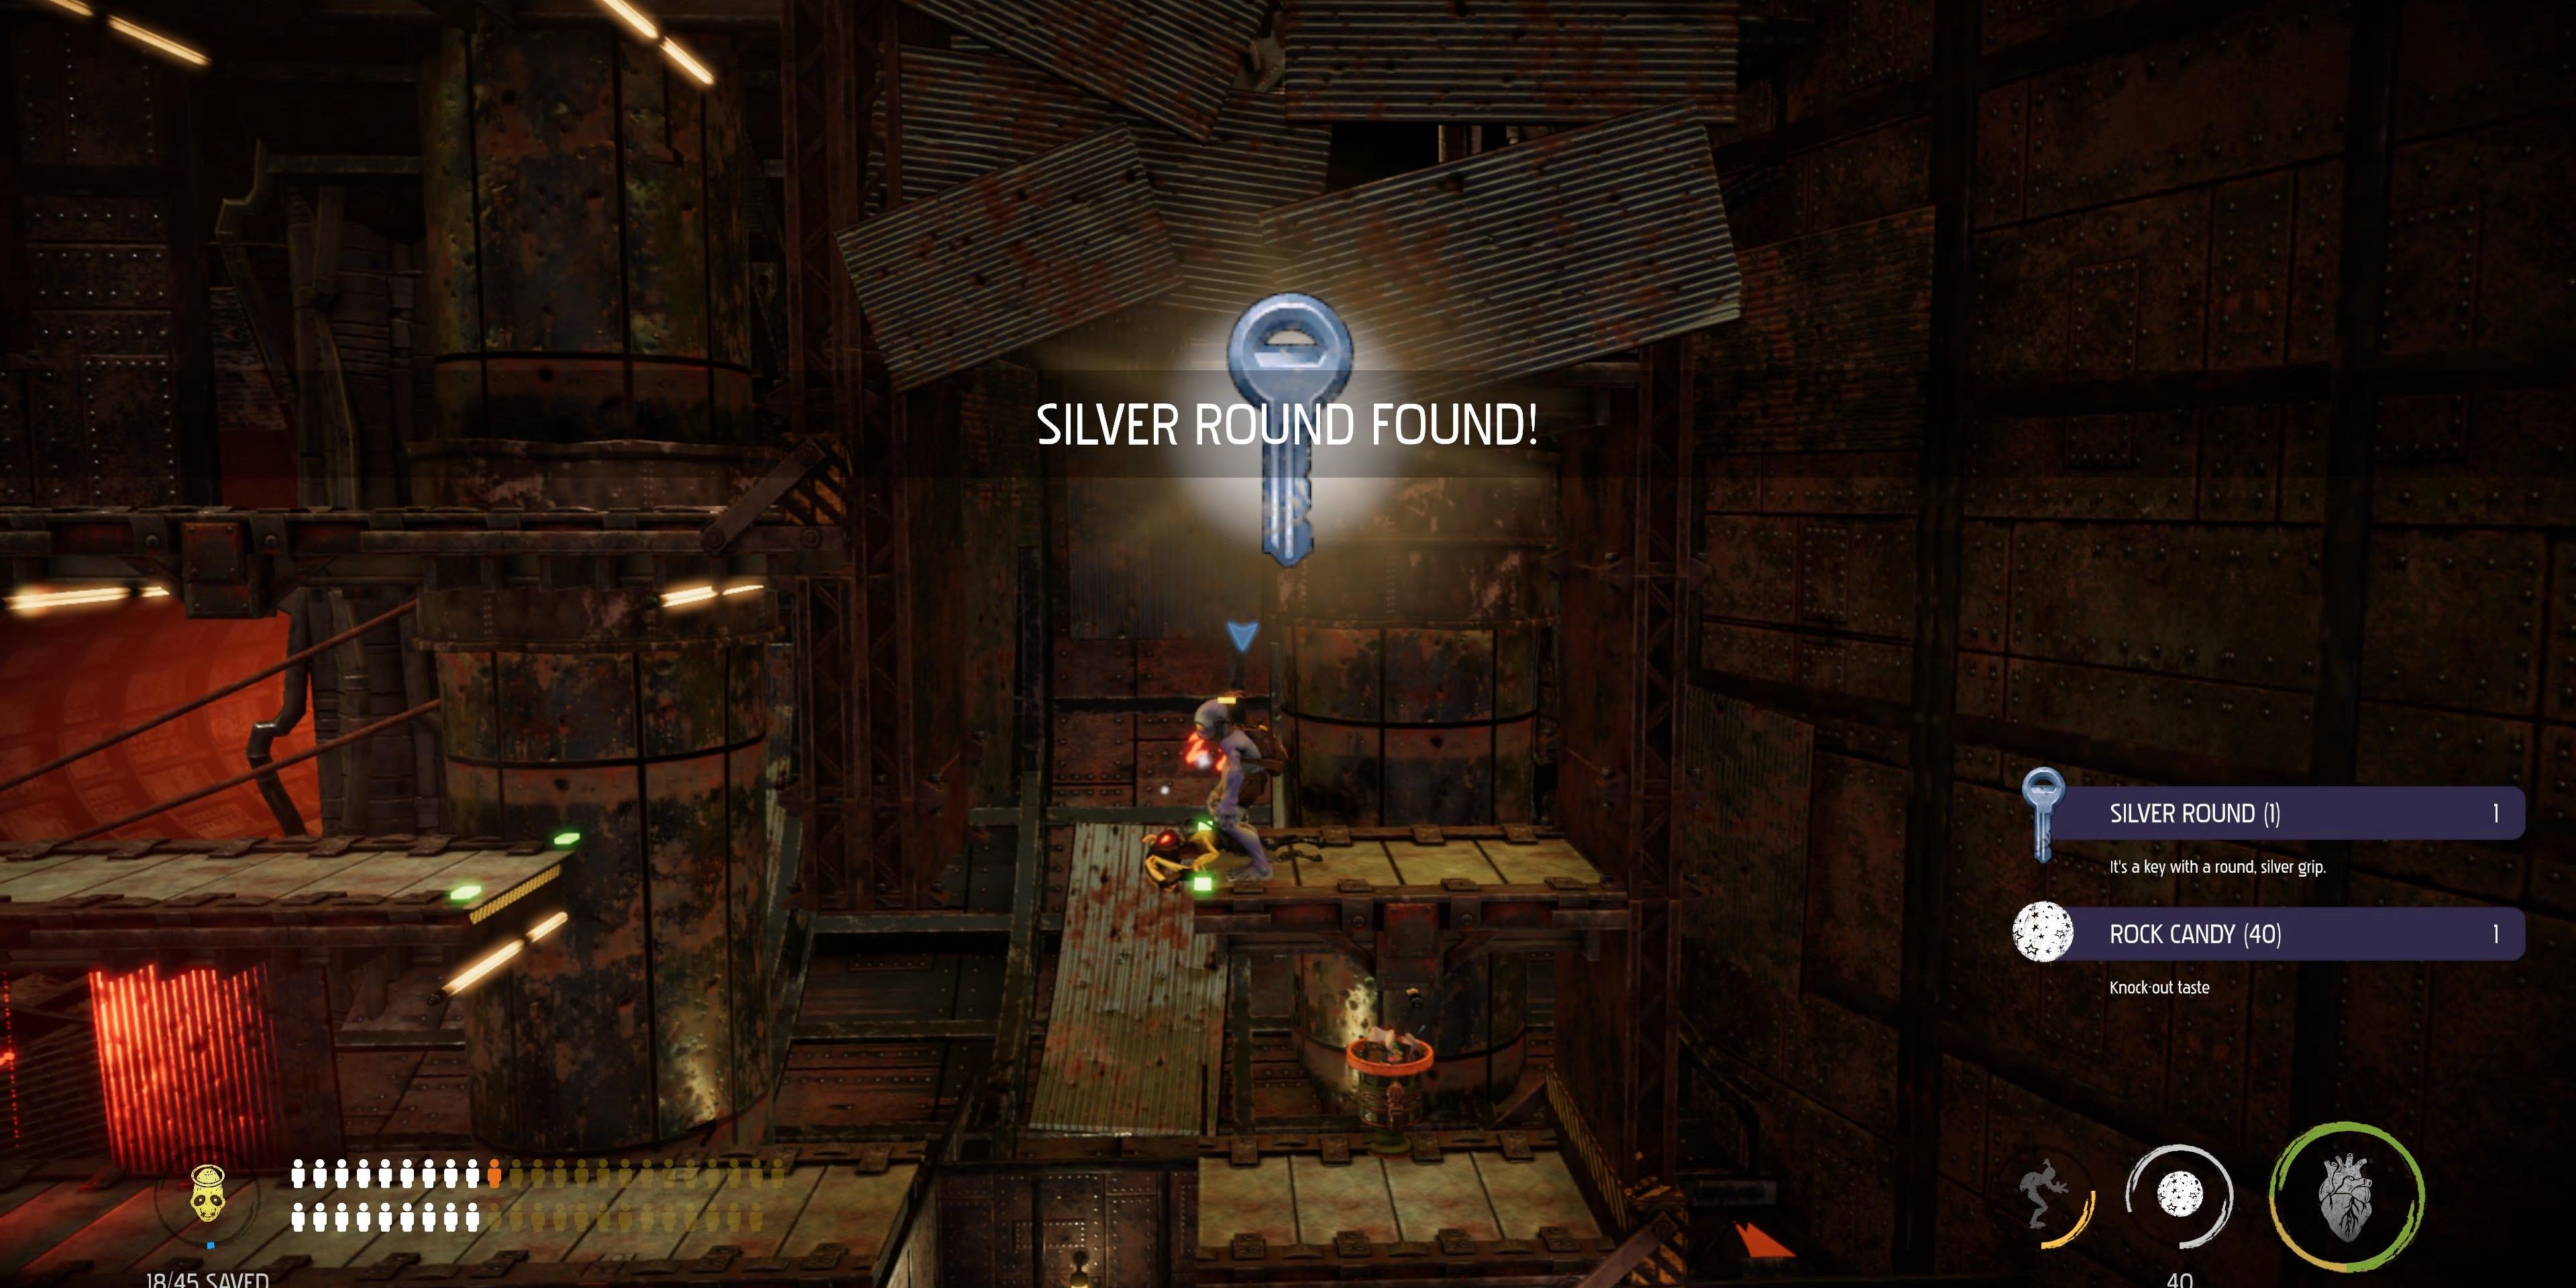 Silver Round Key in Oddworld Soulstorm